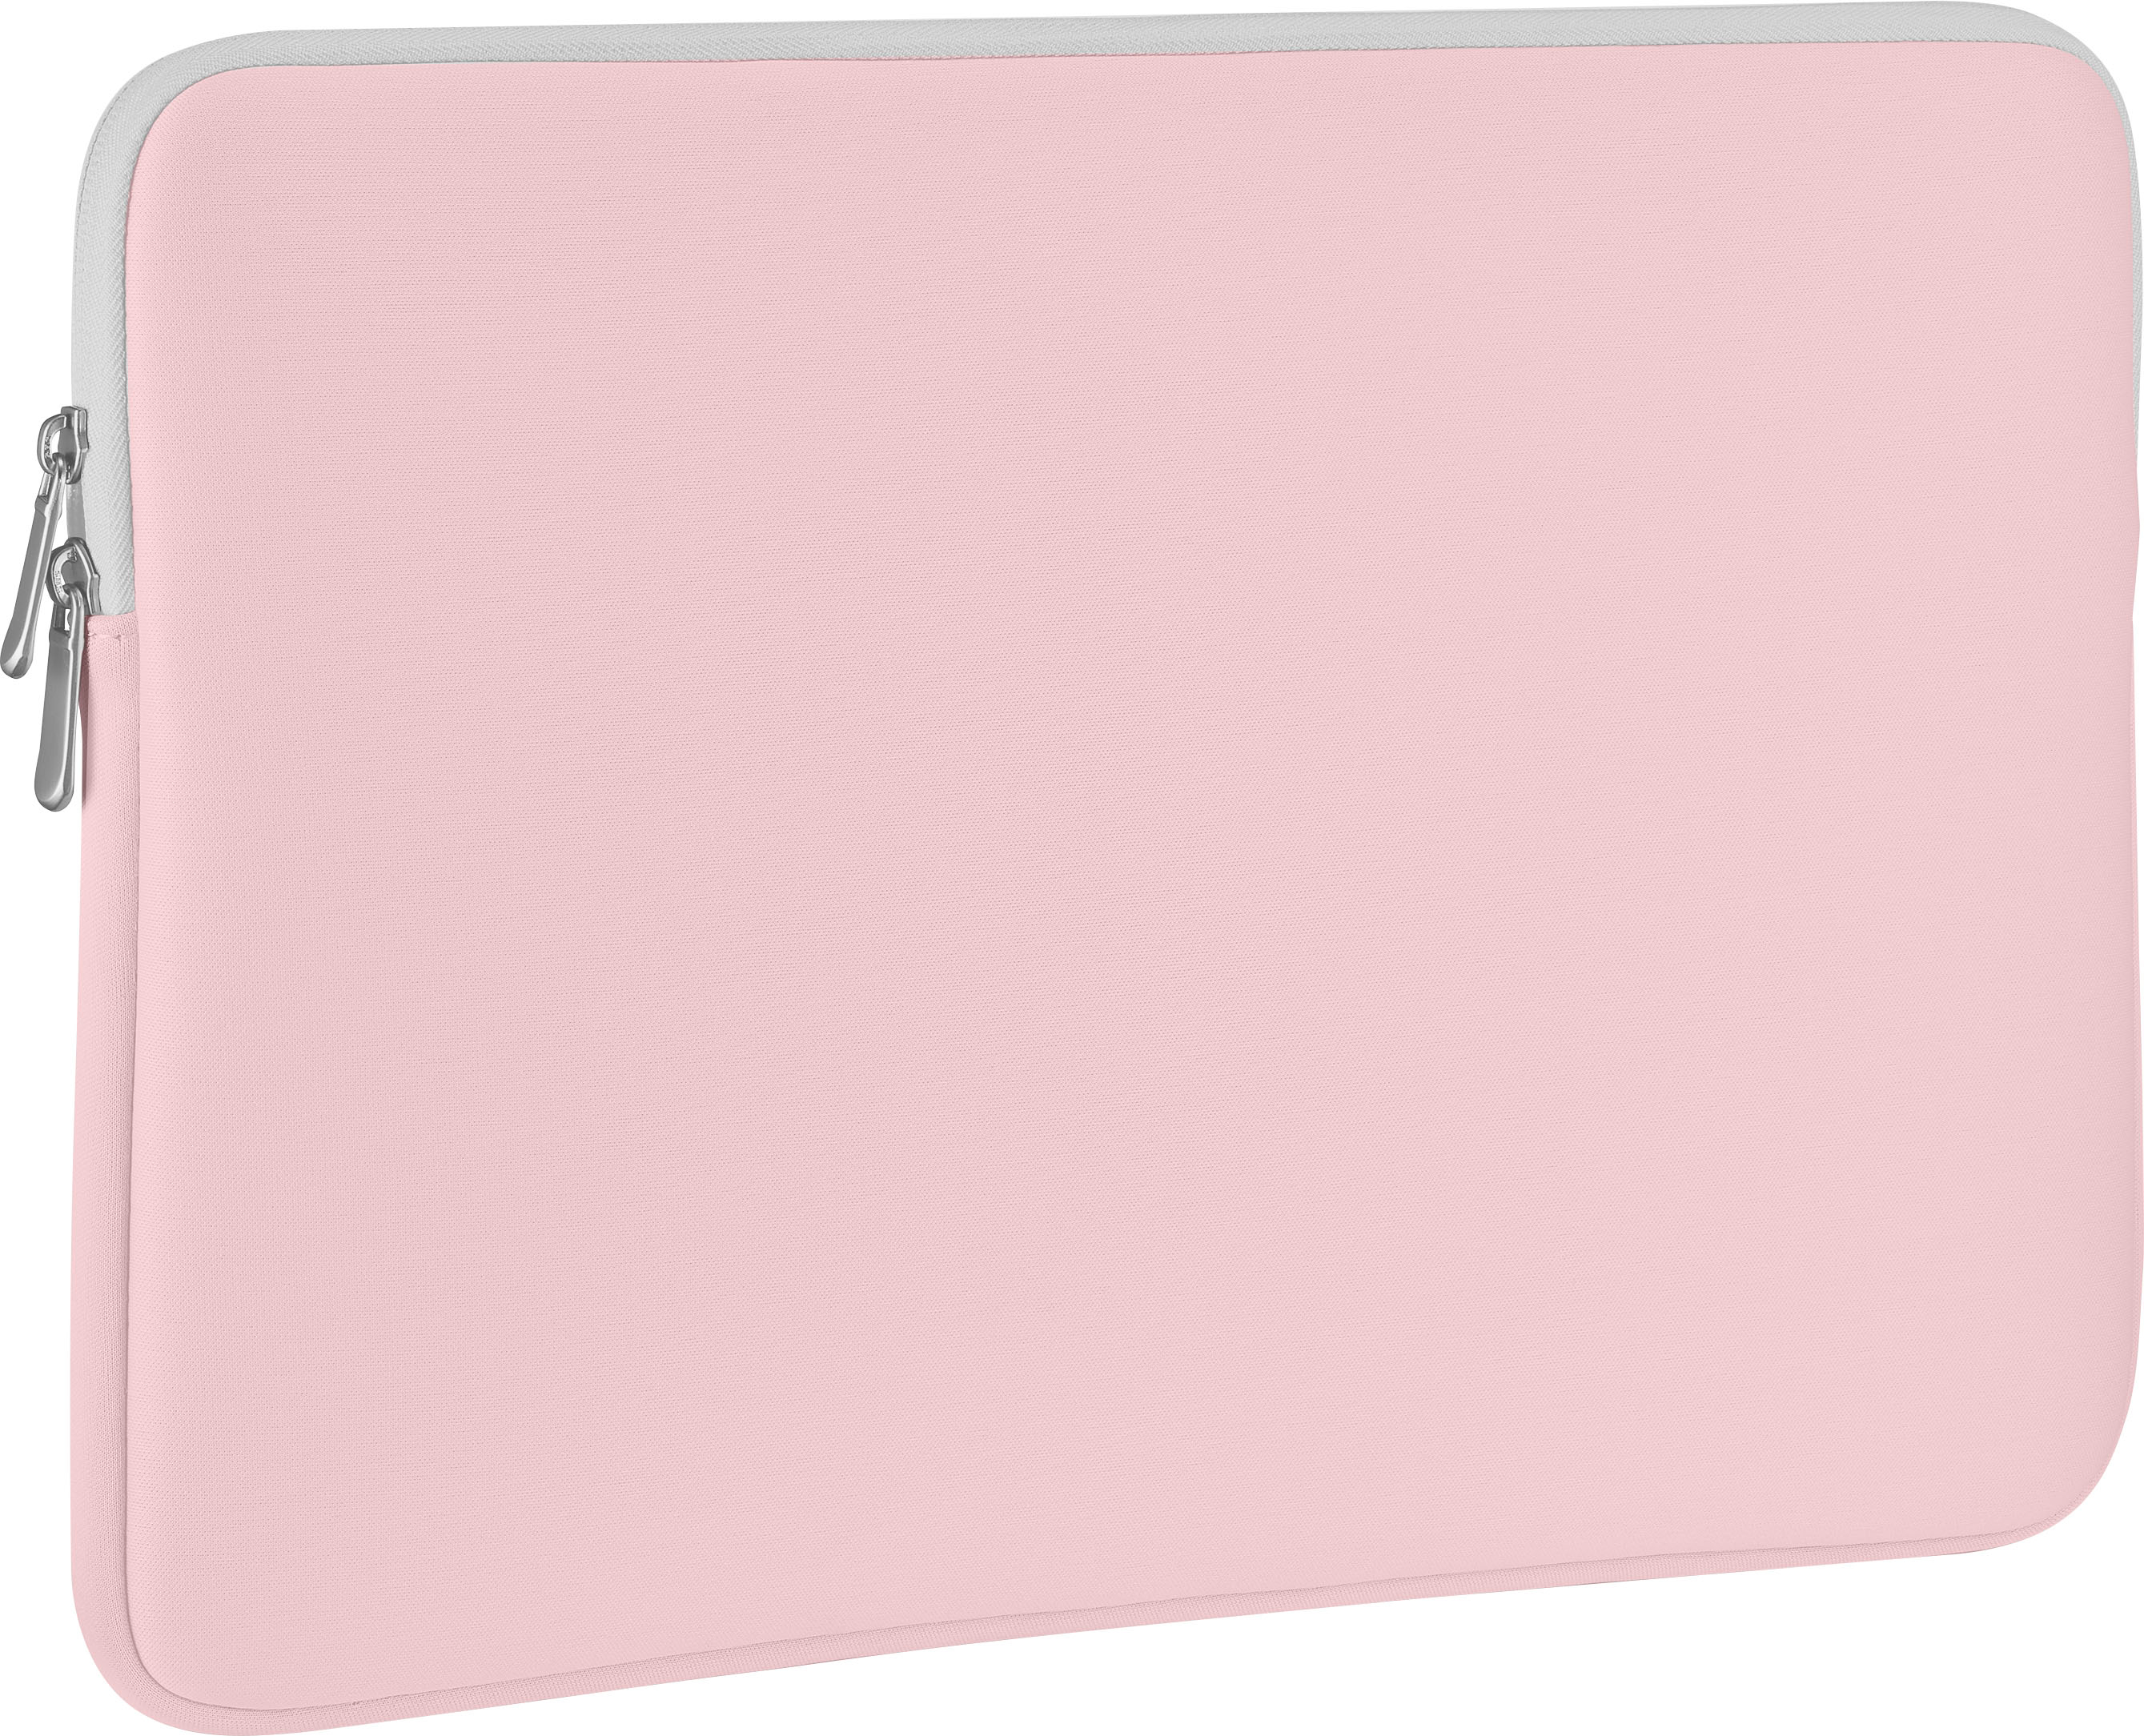 Jumping jack Isoleren Sandalen Modal™ Laptop Sleeve for Most Laptops Up to 16” Pink MD-LS16BLSH - Best Buy